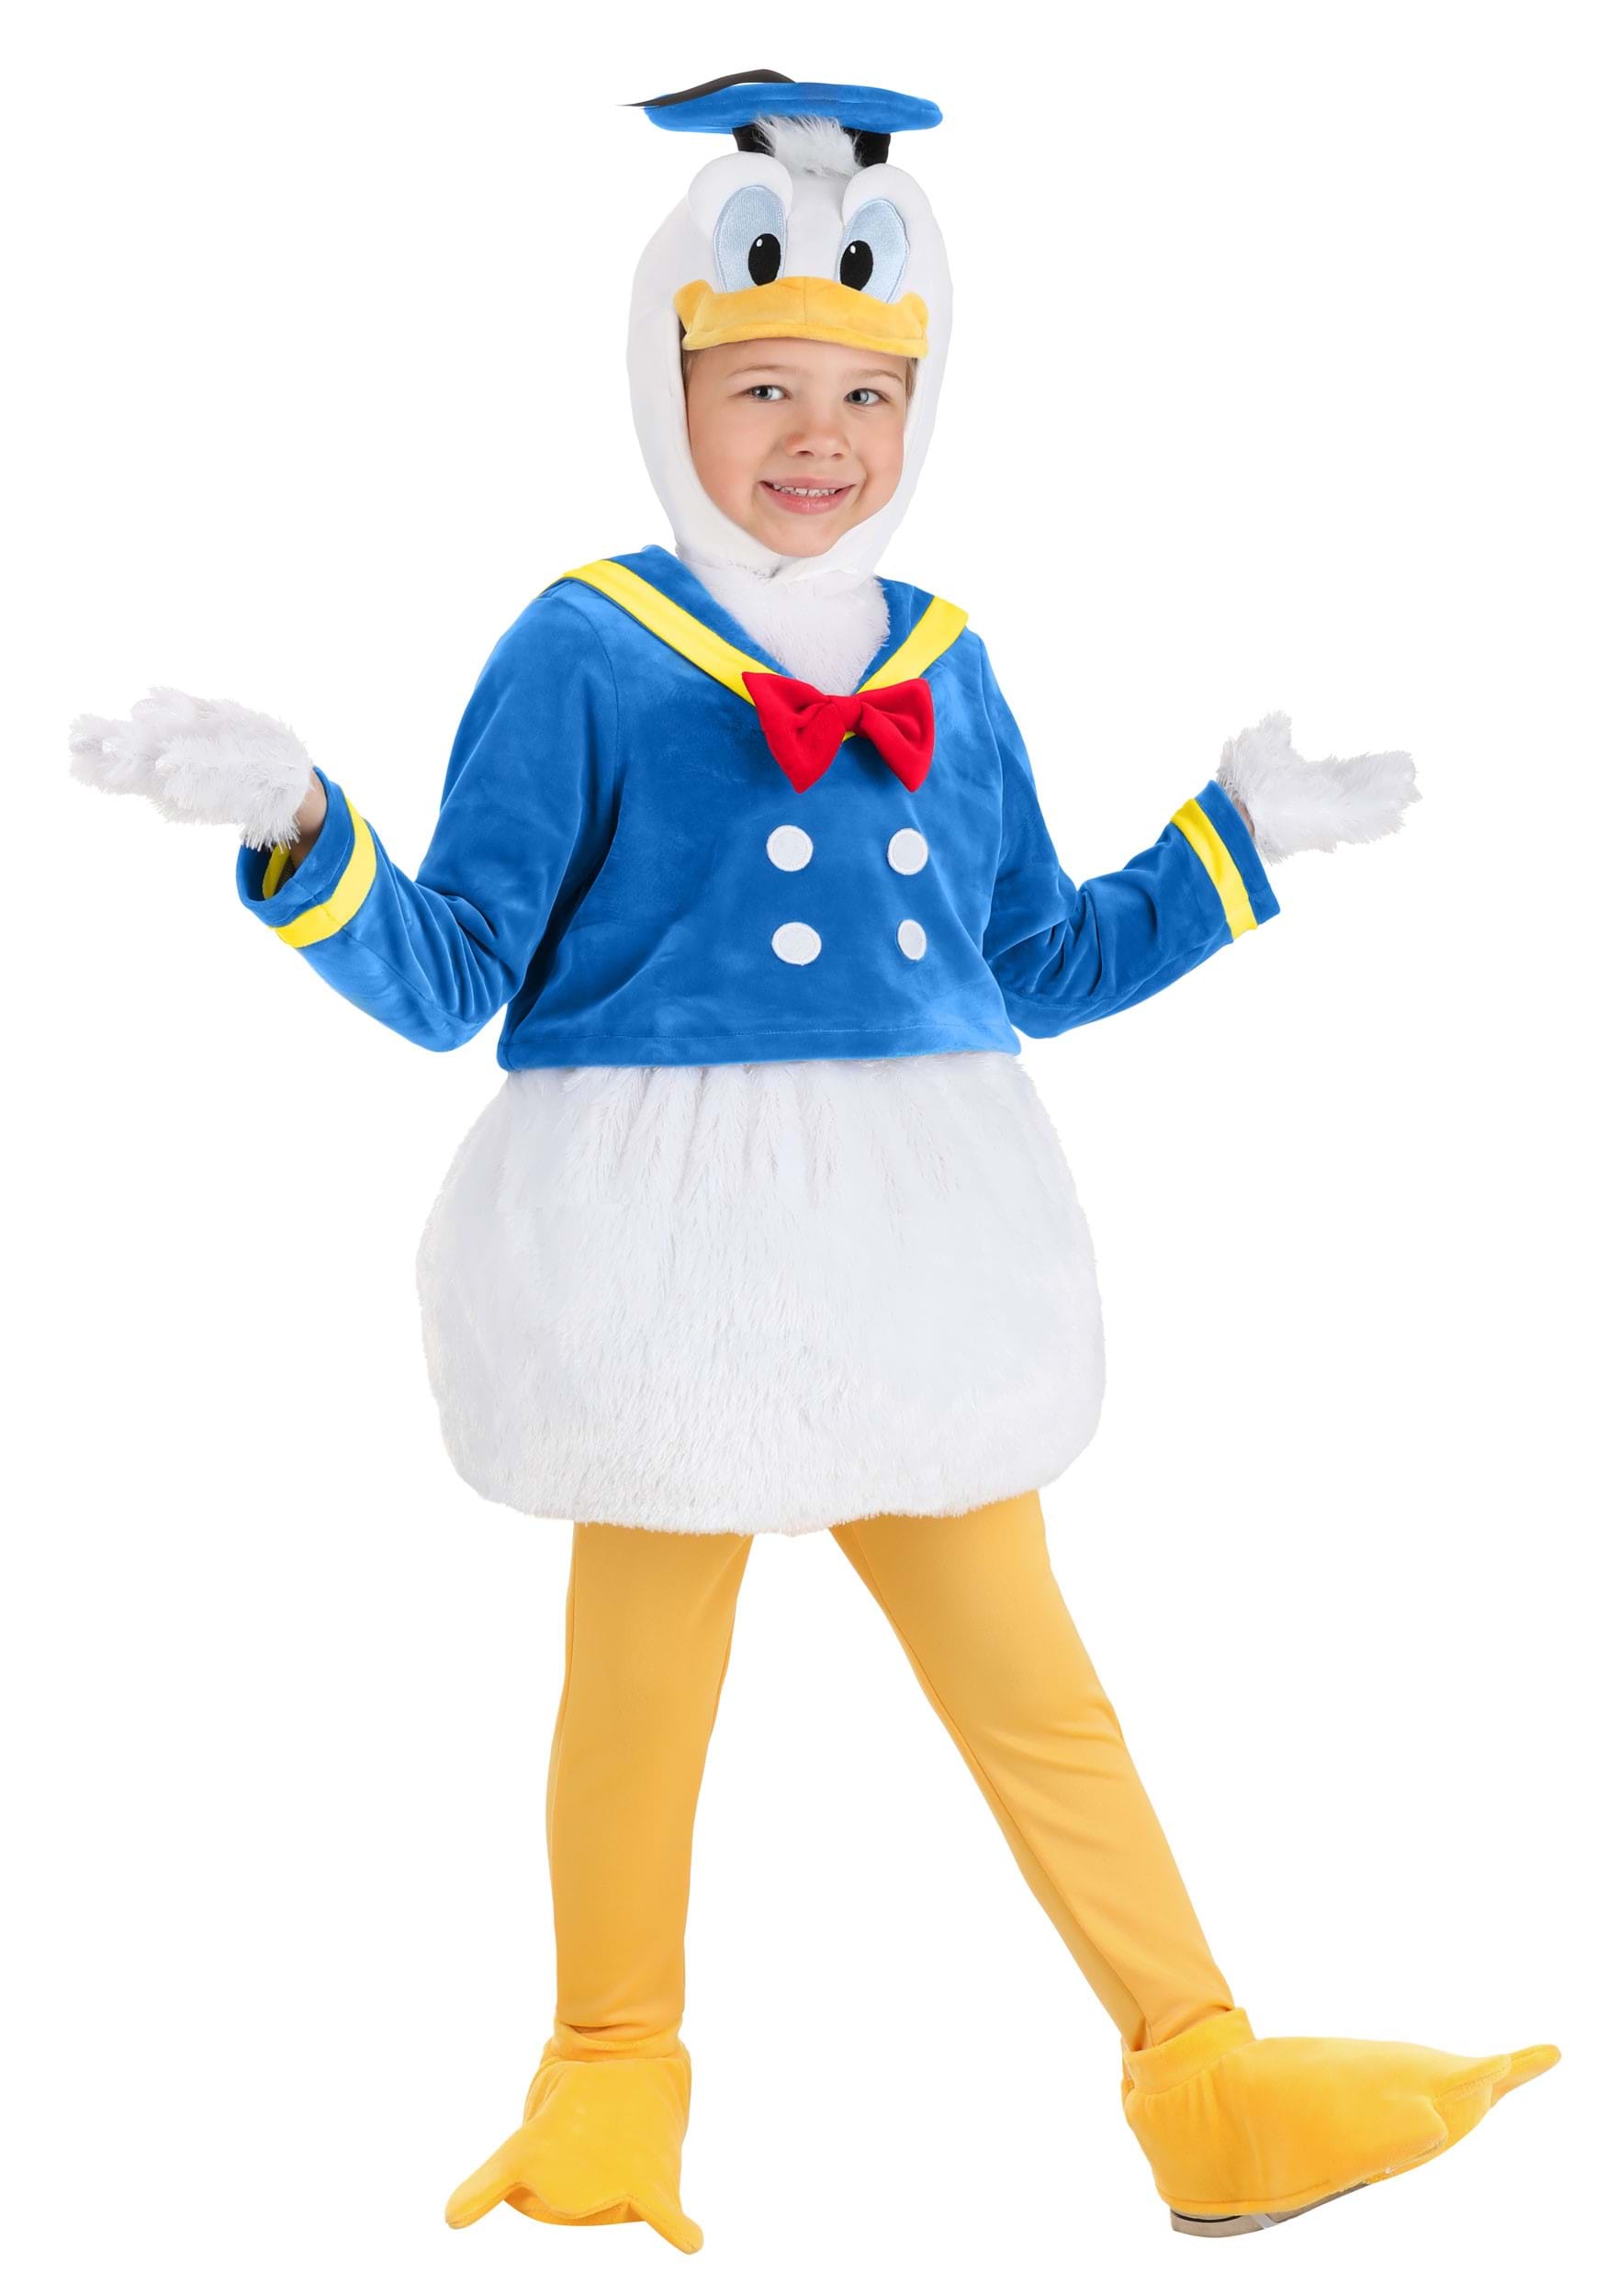 Photos - Fancy Dress FUN Costumes Toddler Donald Duck Costume Orange/Blue/White FUN3423